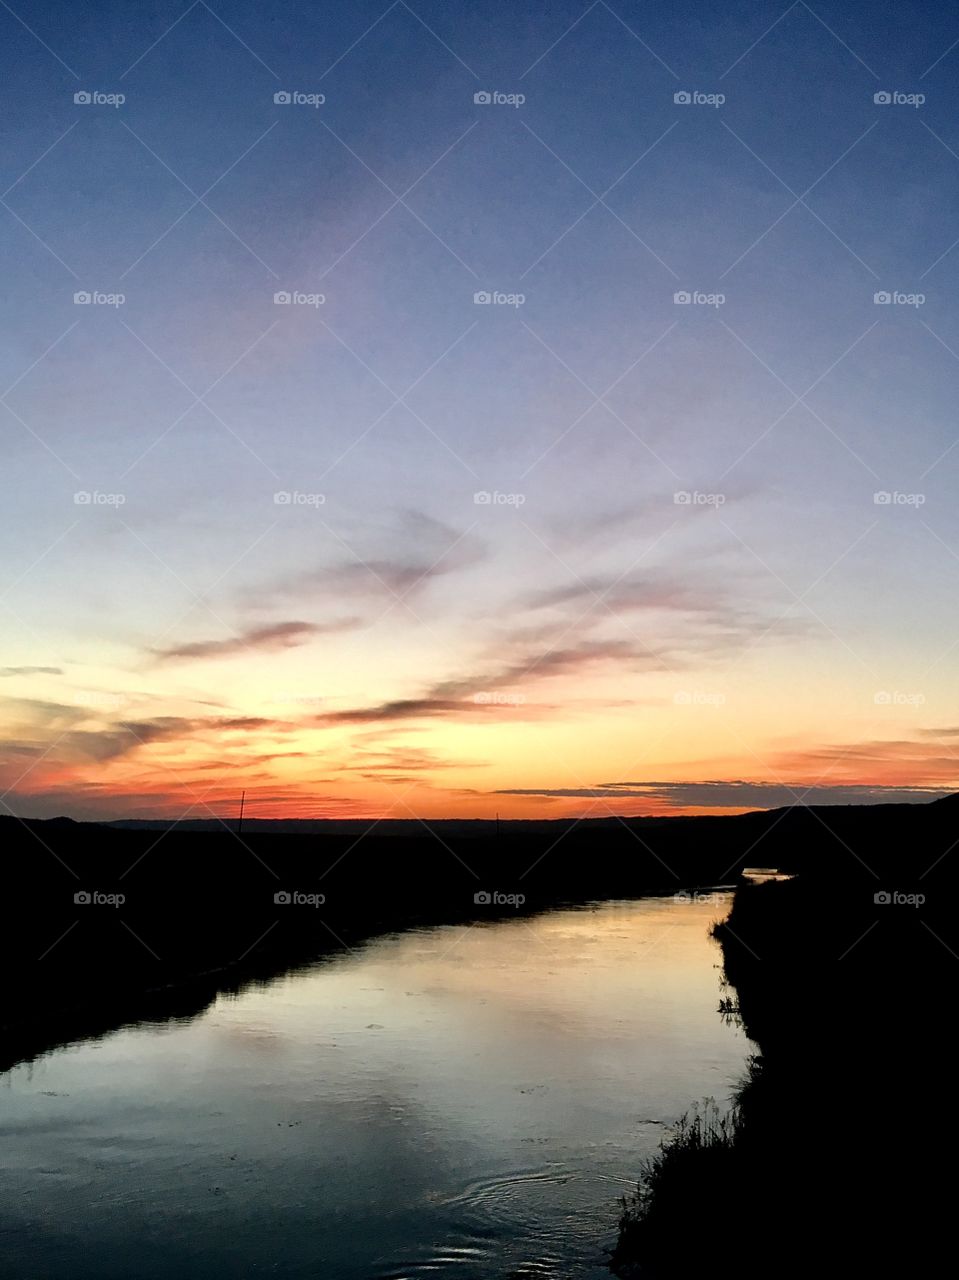 River sunset 